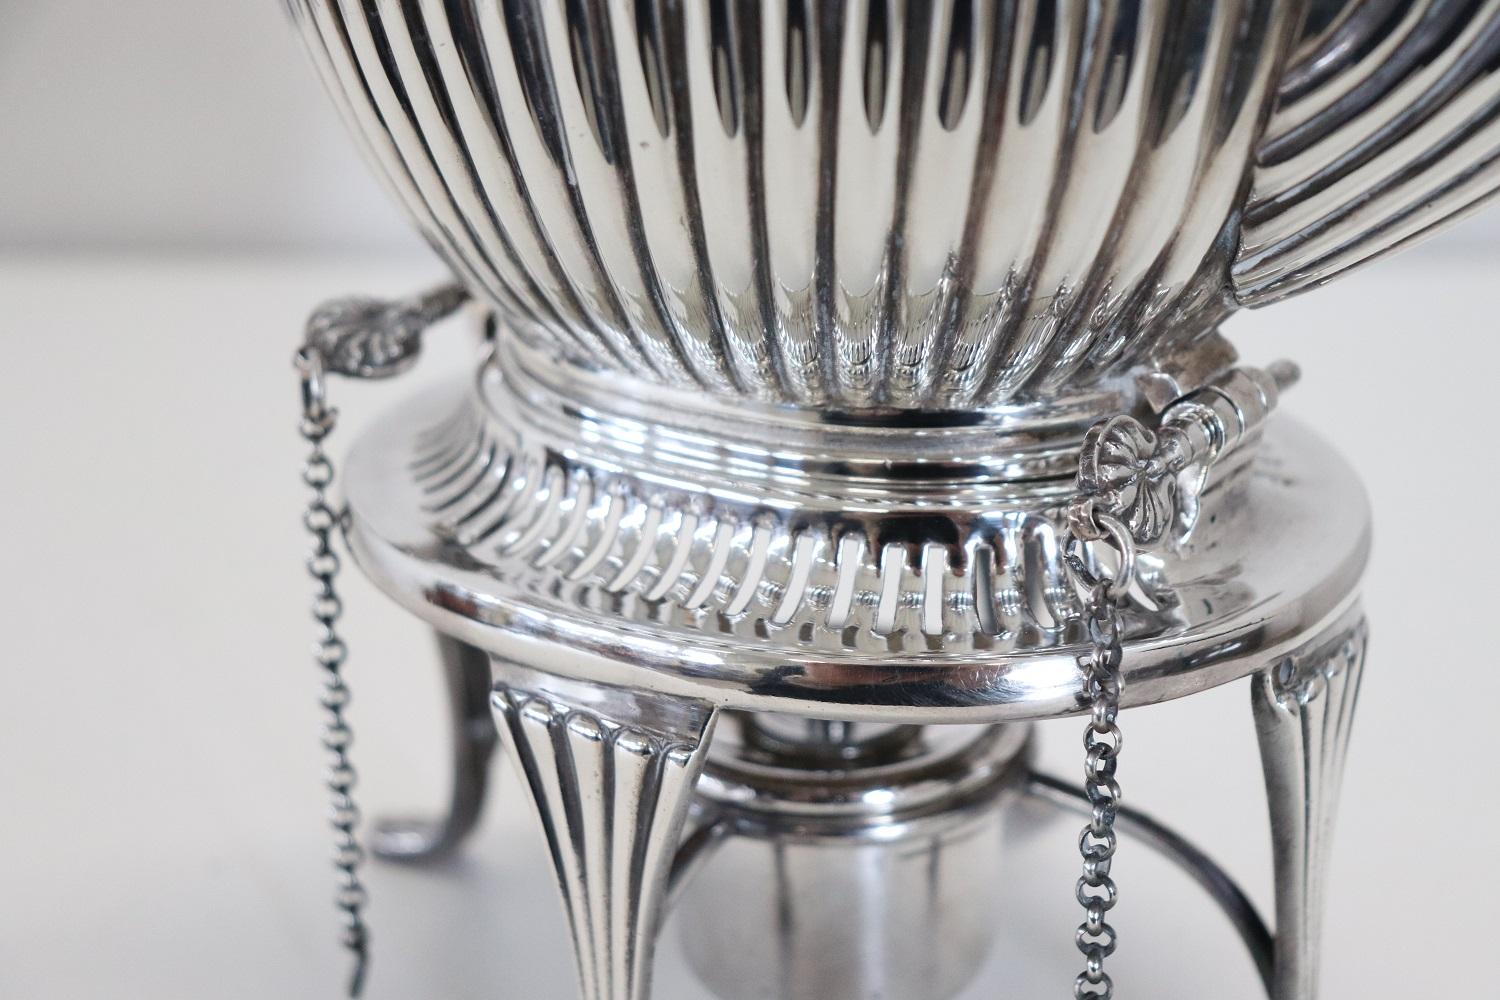 Late 19th Century 19th Century British Silver Plate Teapot